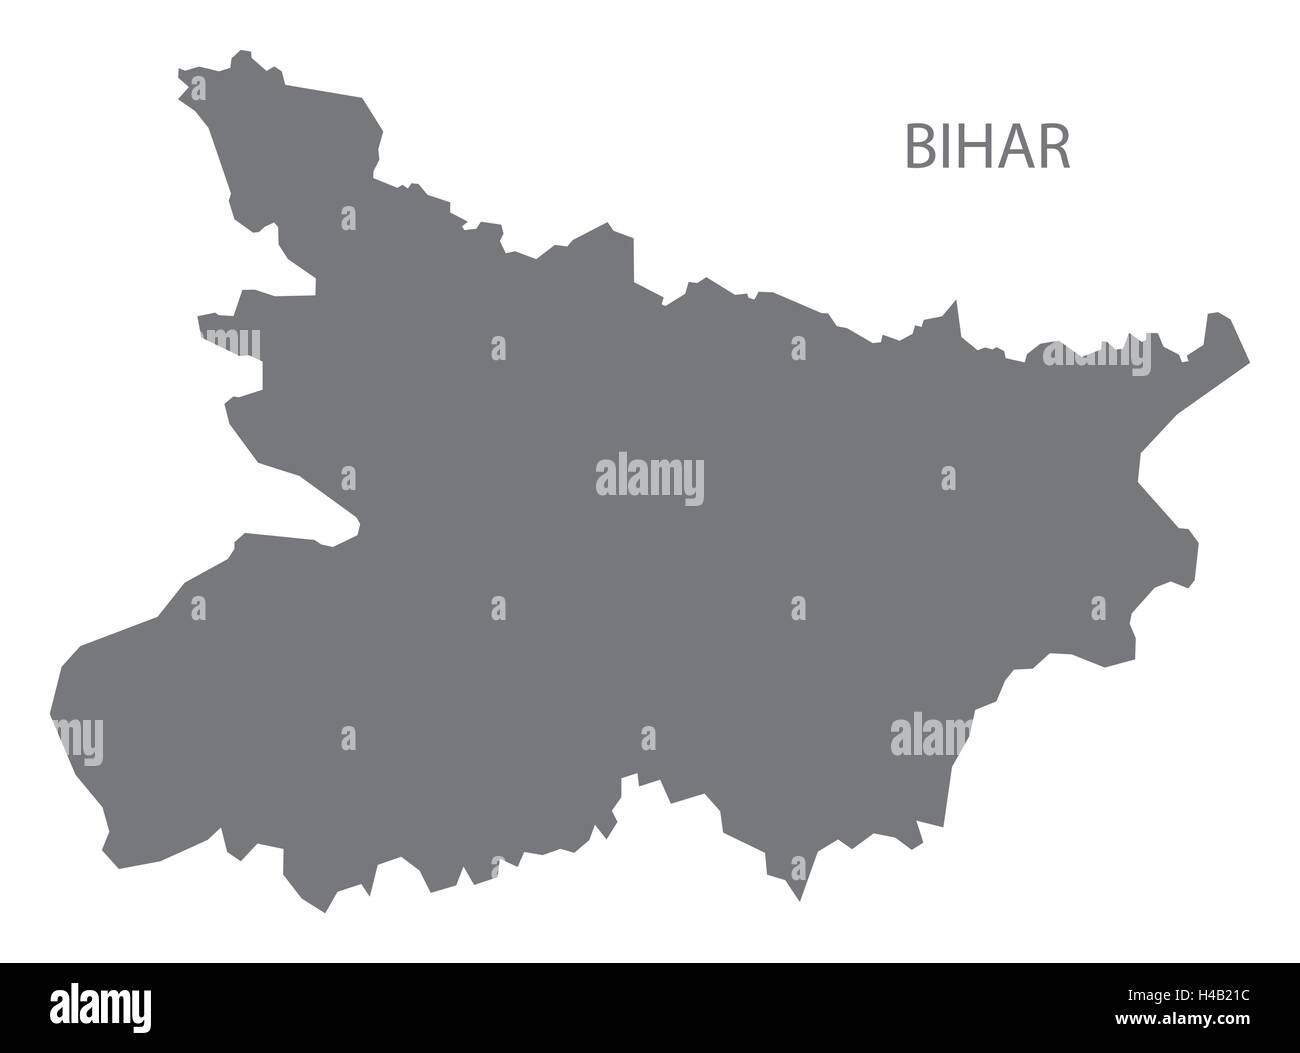 Bihar india grey map illustration Stock Vector